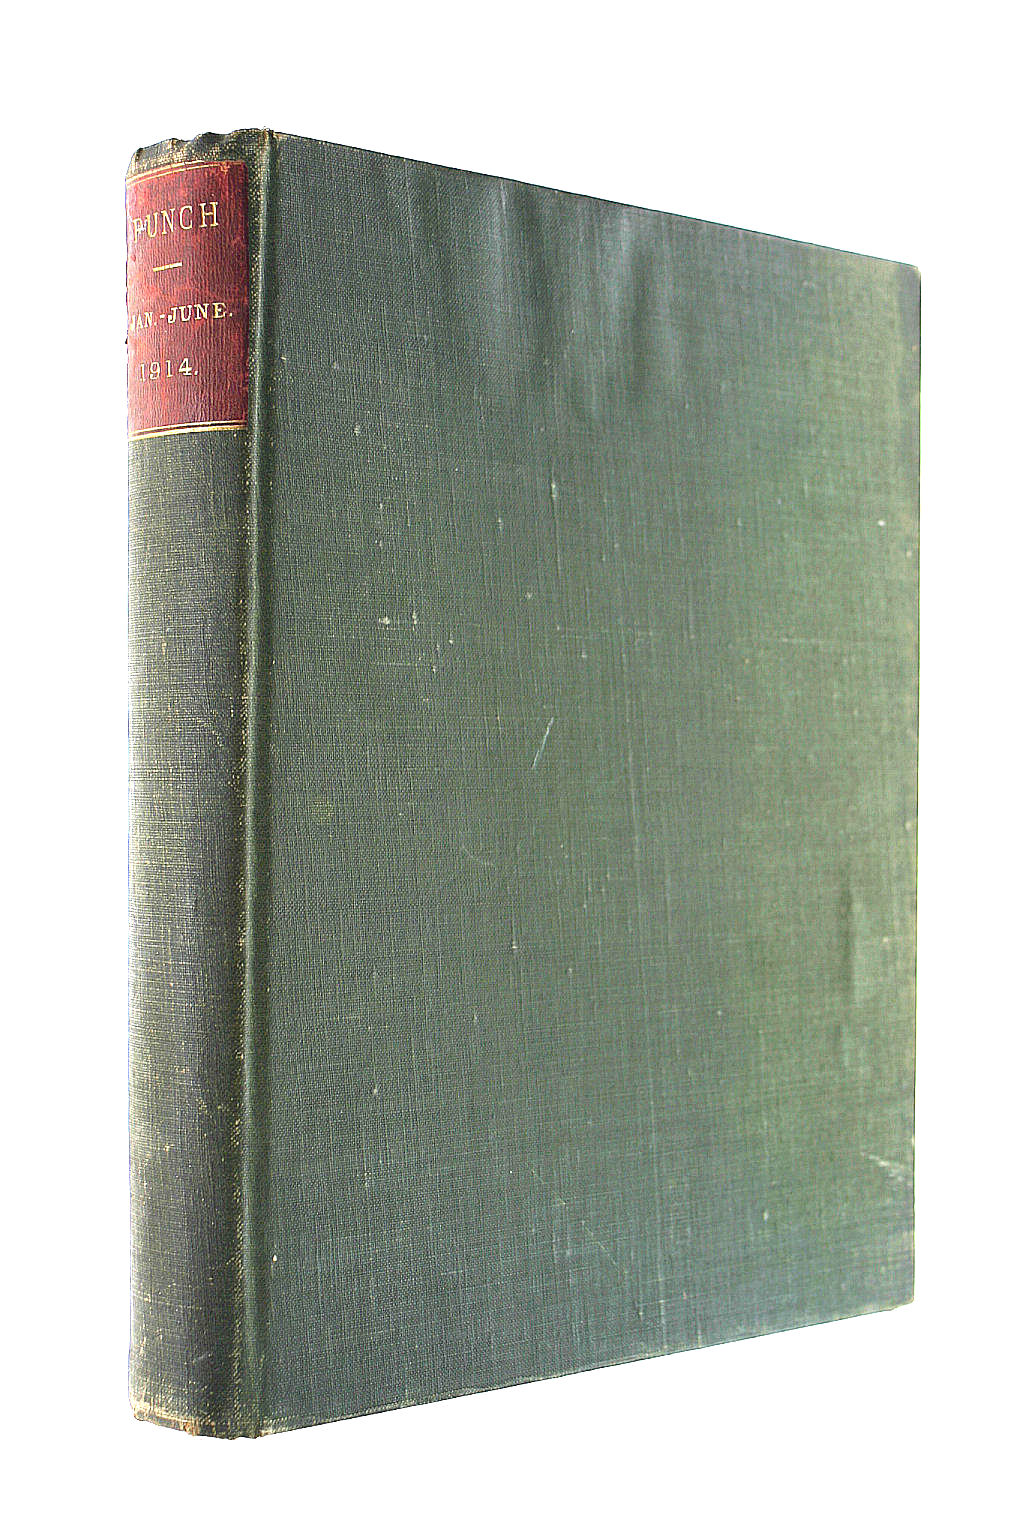 ANON - Punch, Vol. CXLVI., January-June, 1914